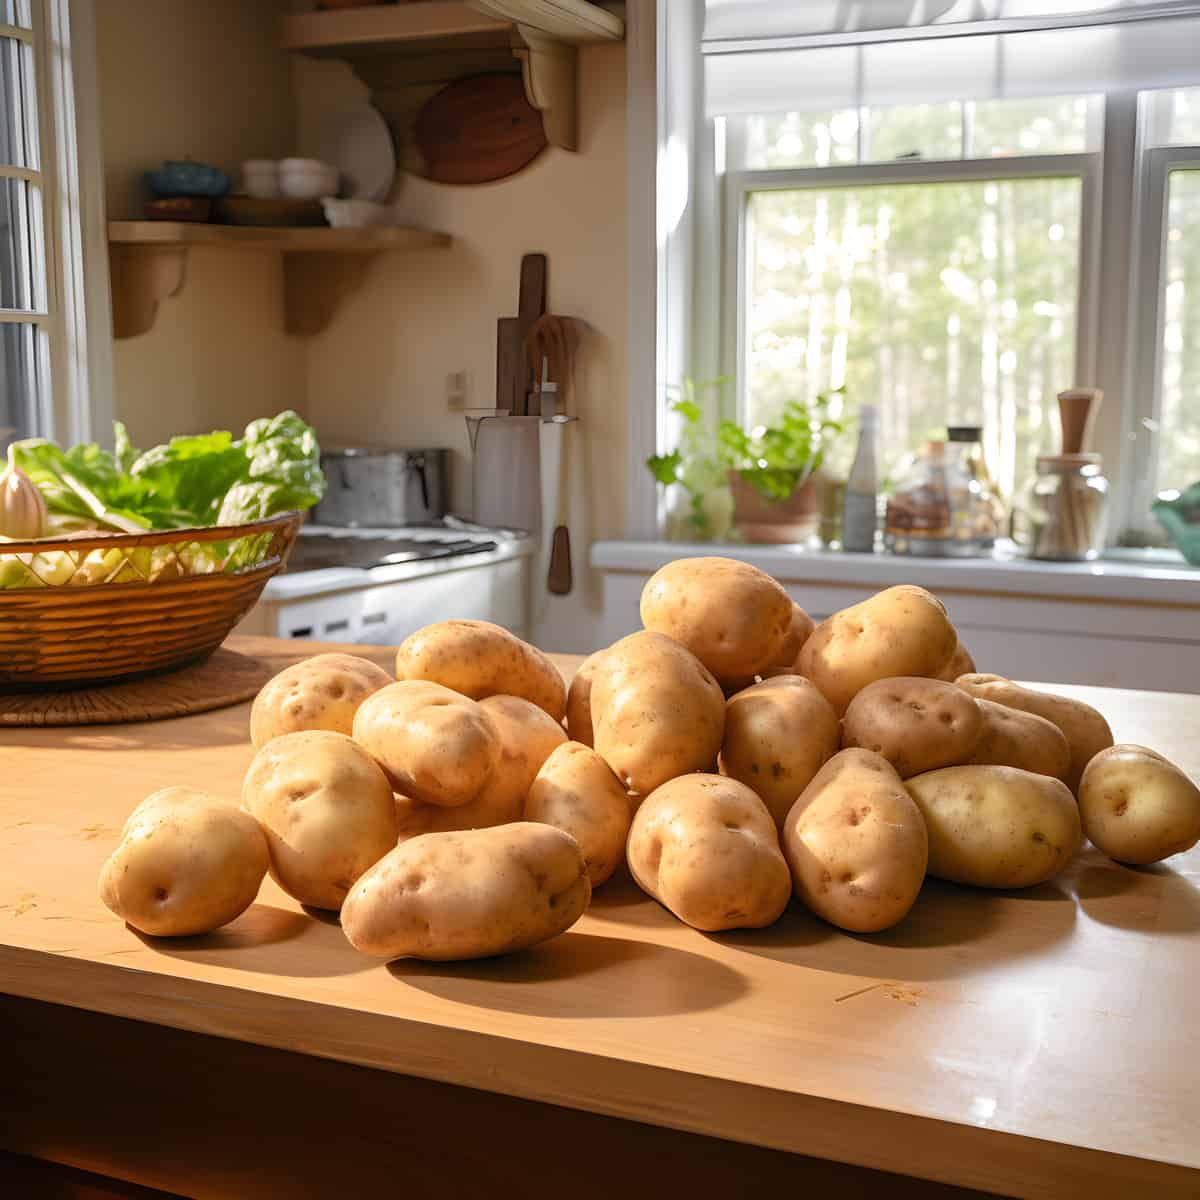 Pachacoa Potatoes on a kitchen counter